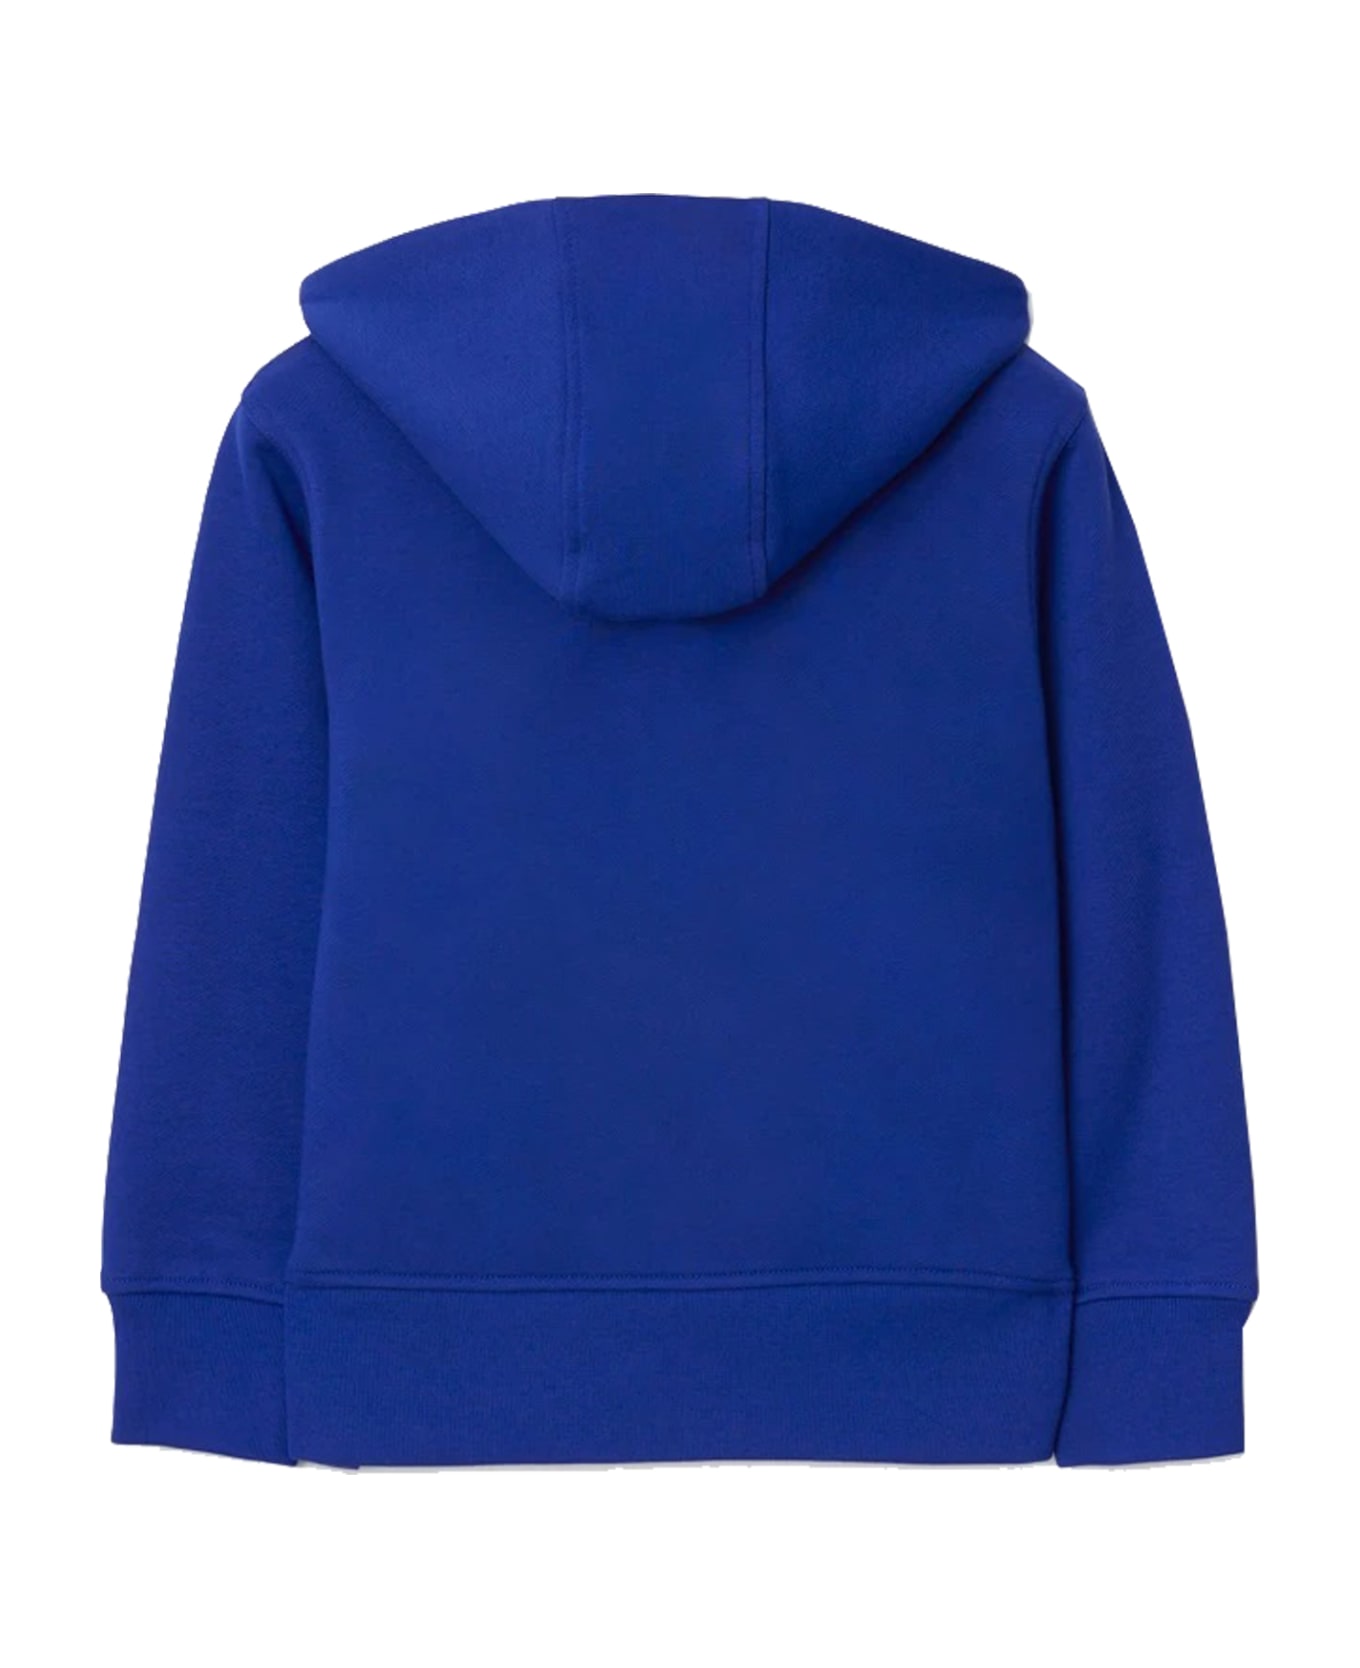 Burberry Zip-up Hoodie Sweatshirt In Ekd Cotton - Blue